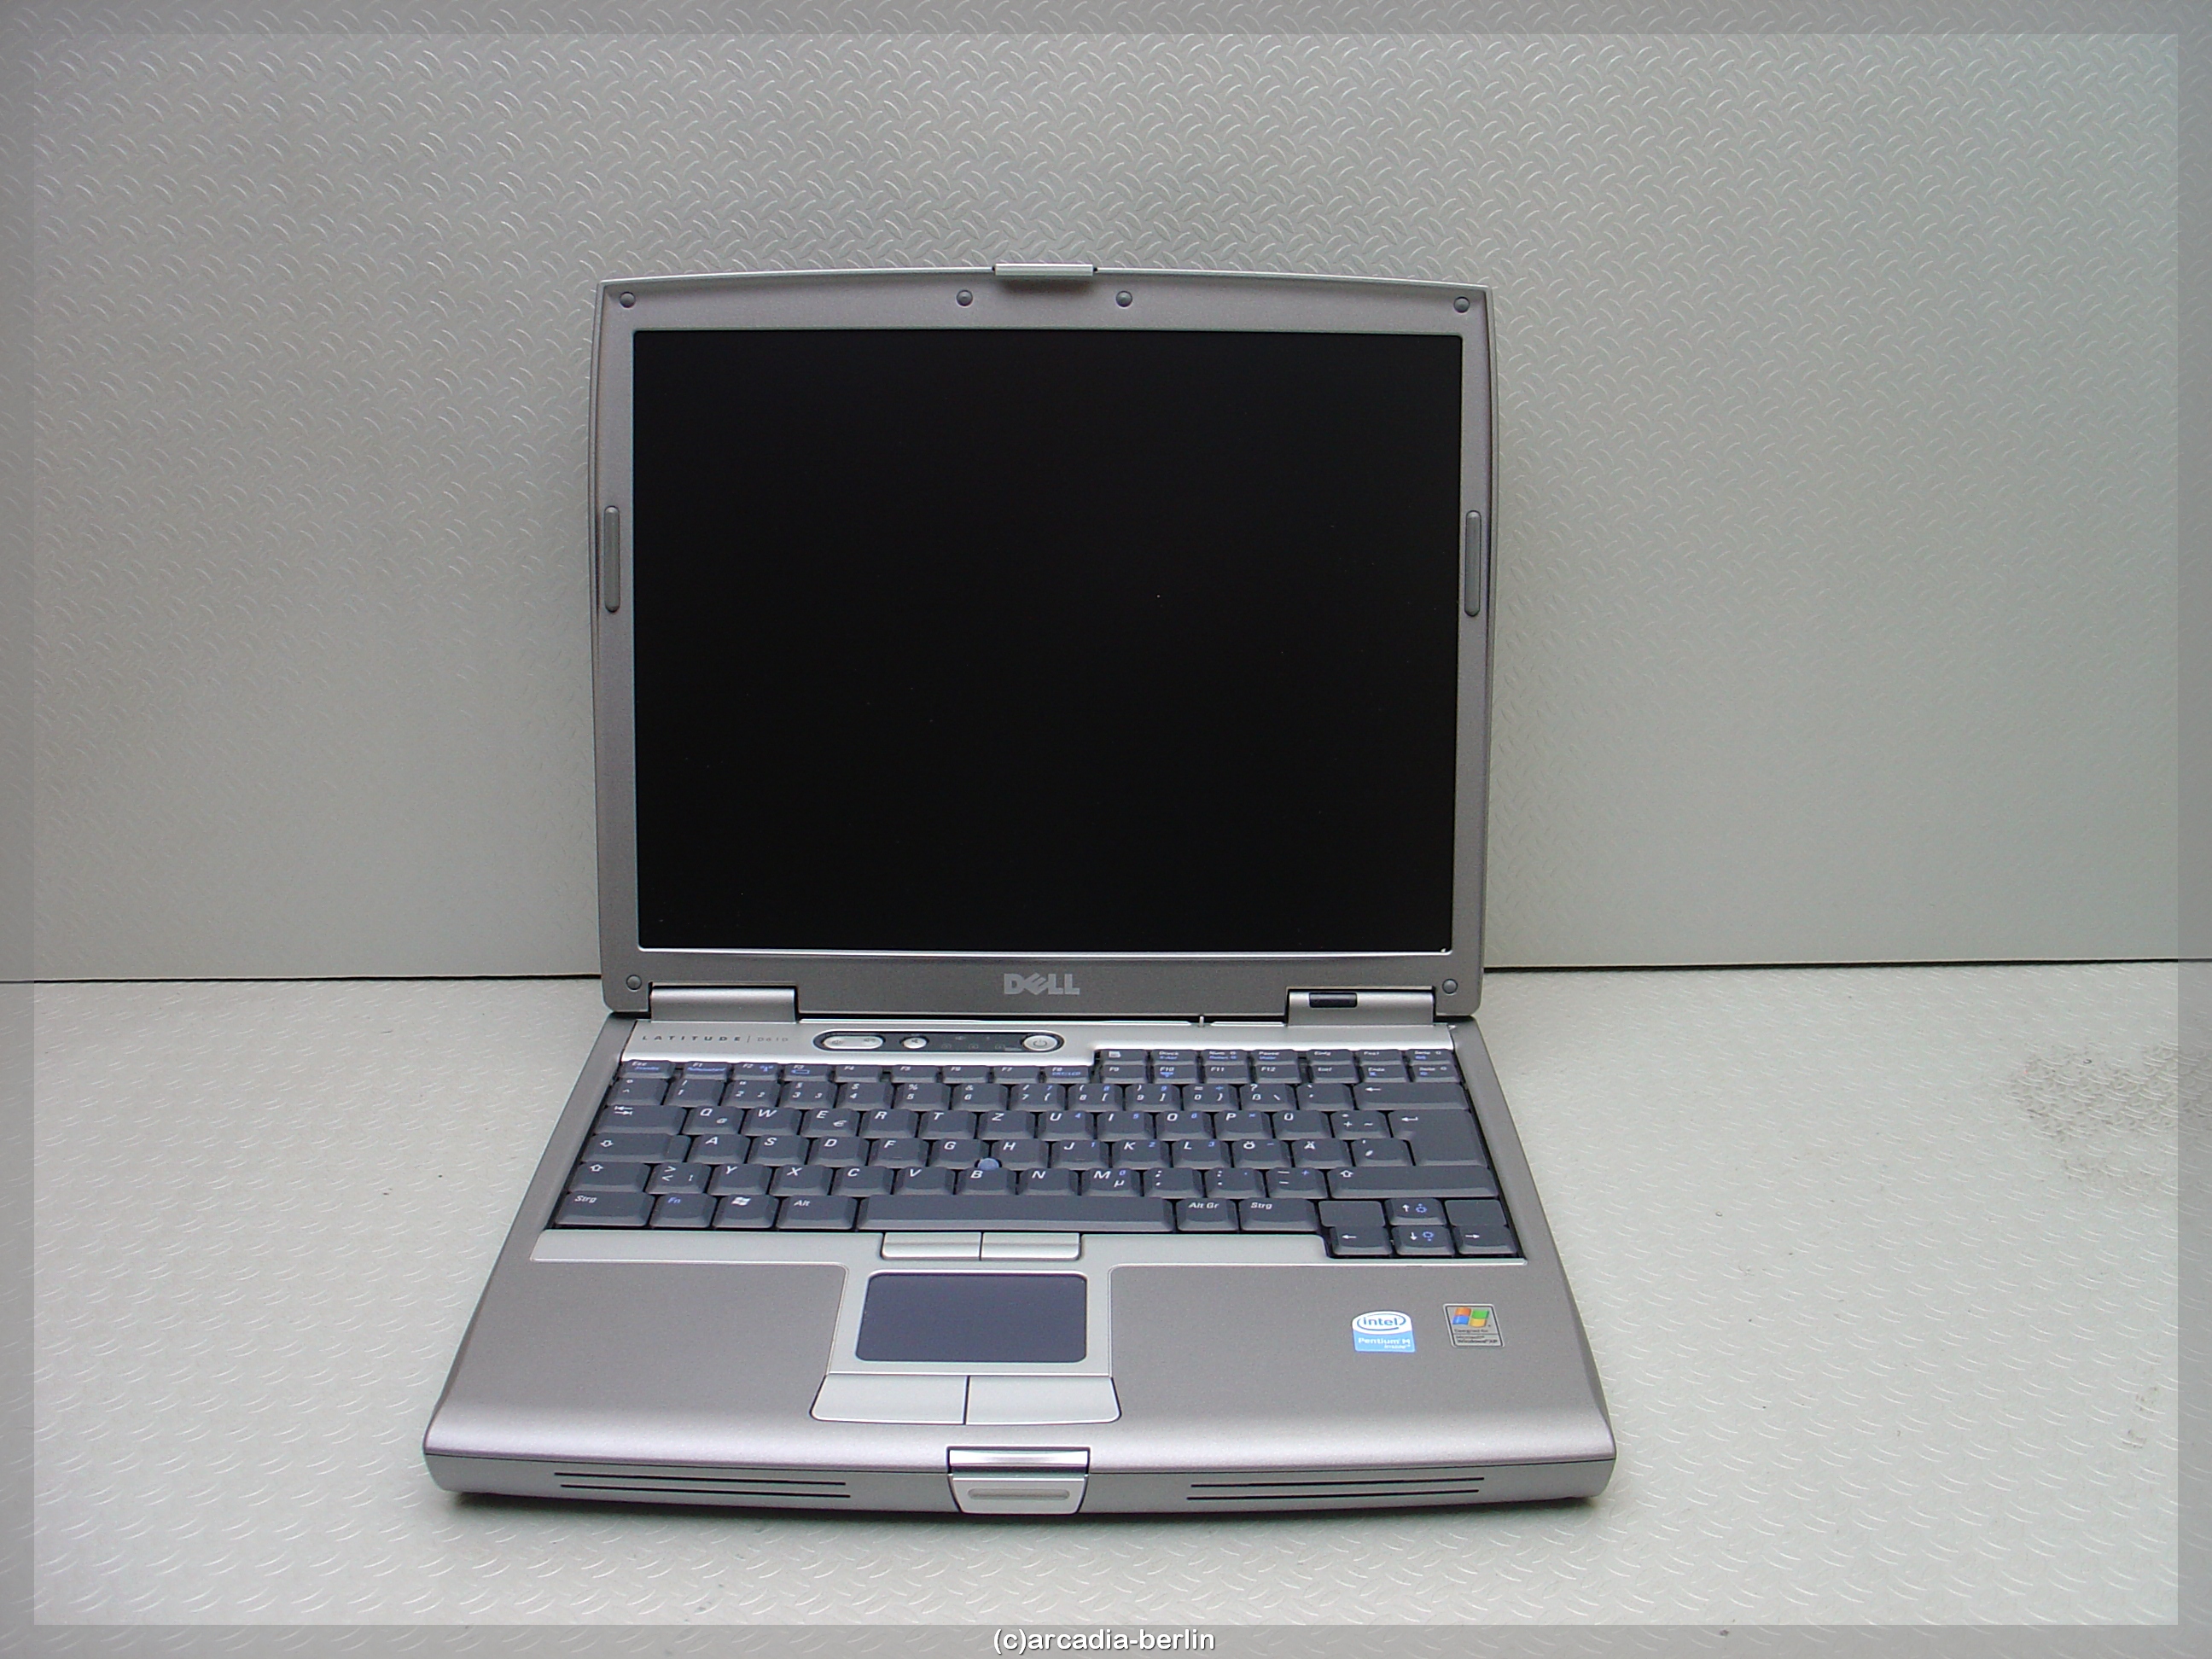 Notebook Laptop DELL Latitude D610 120GB HDD 1GB RAM gebraucht Linux #24336